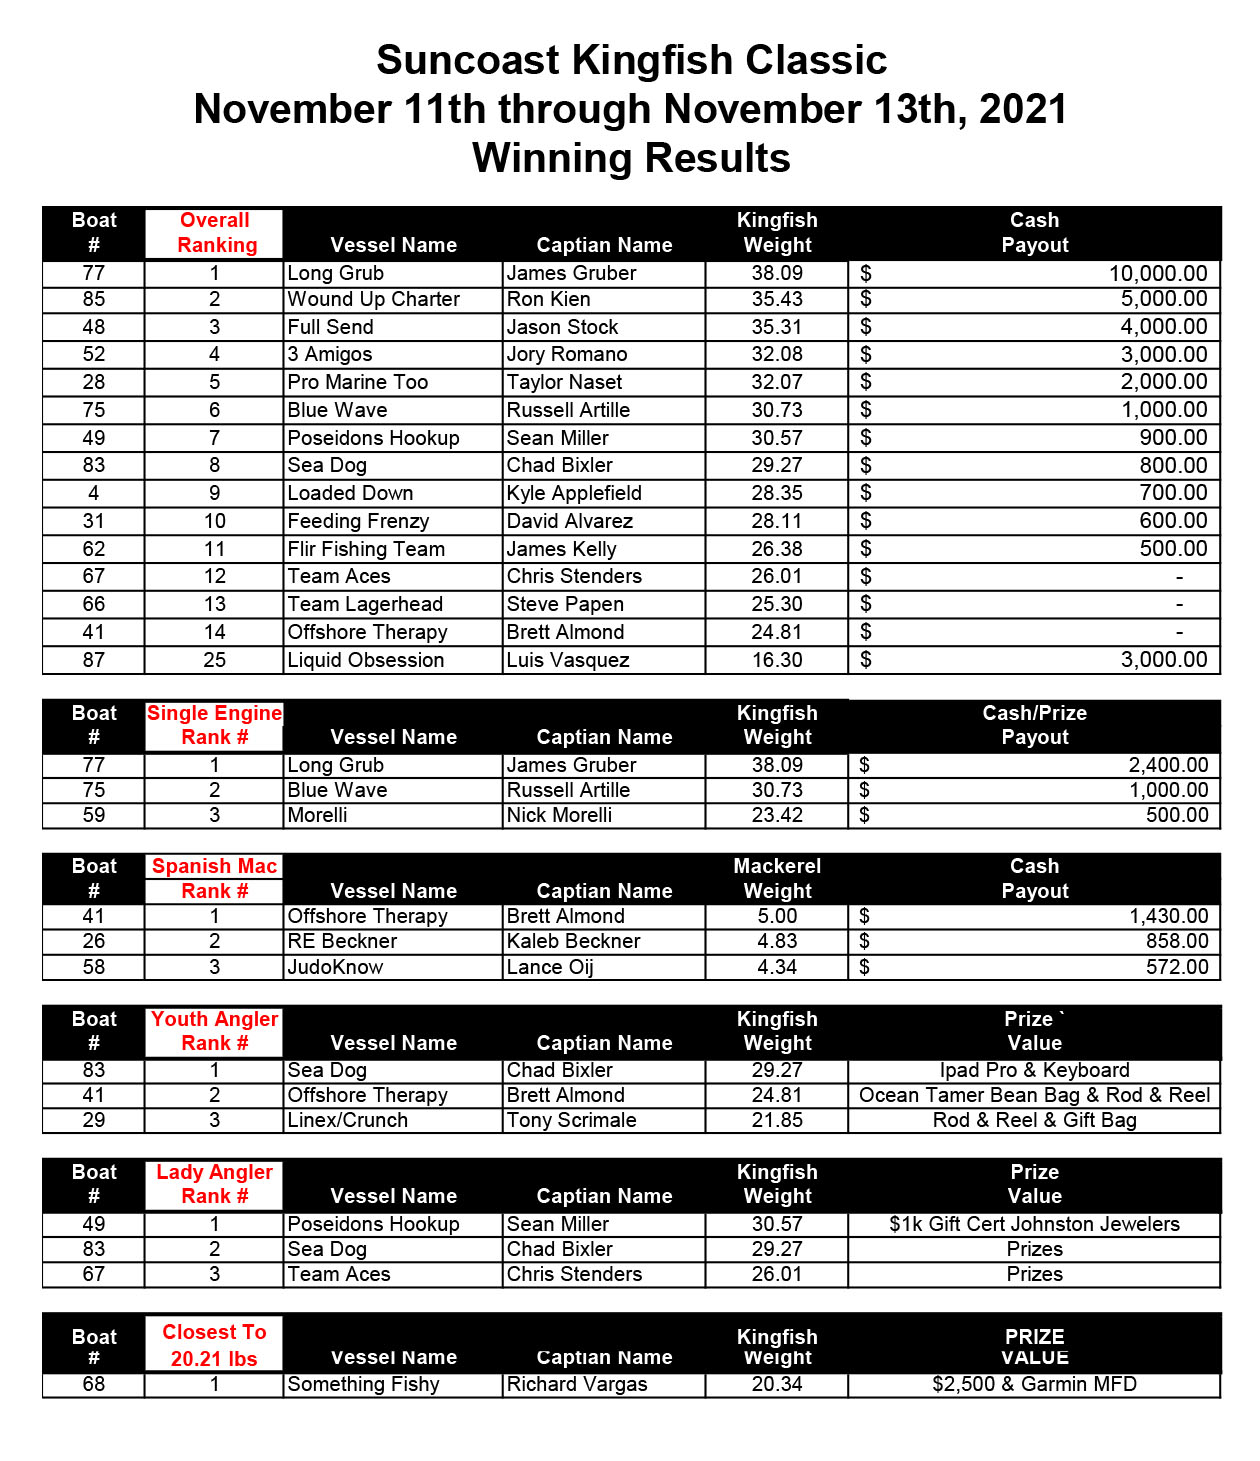 Fall 2021 - Suncoast Kingfish Classic Winning Results